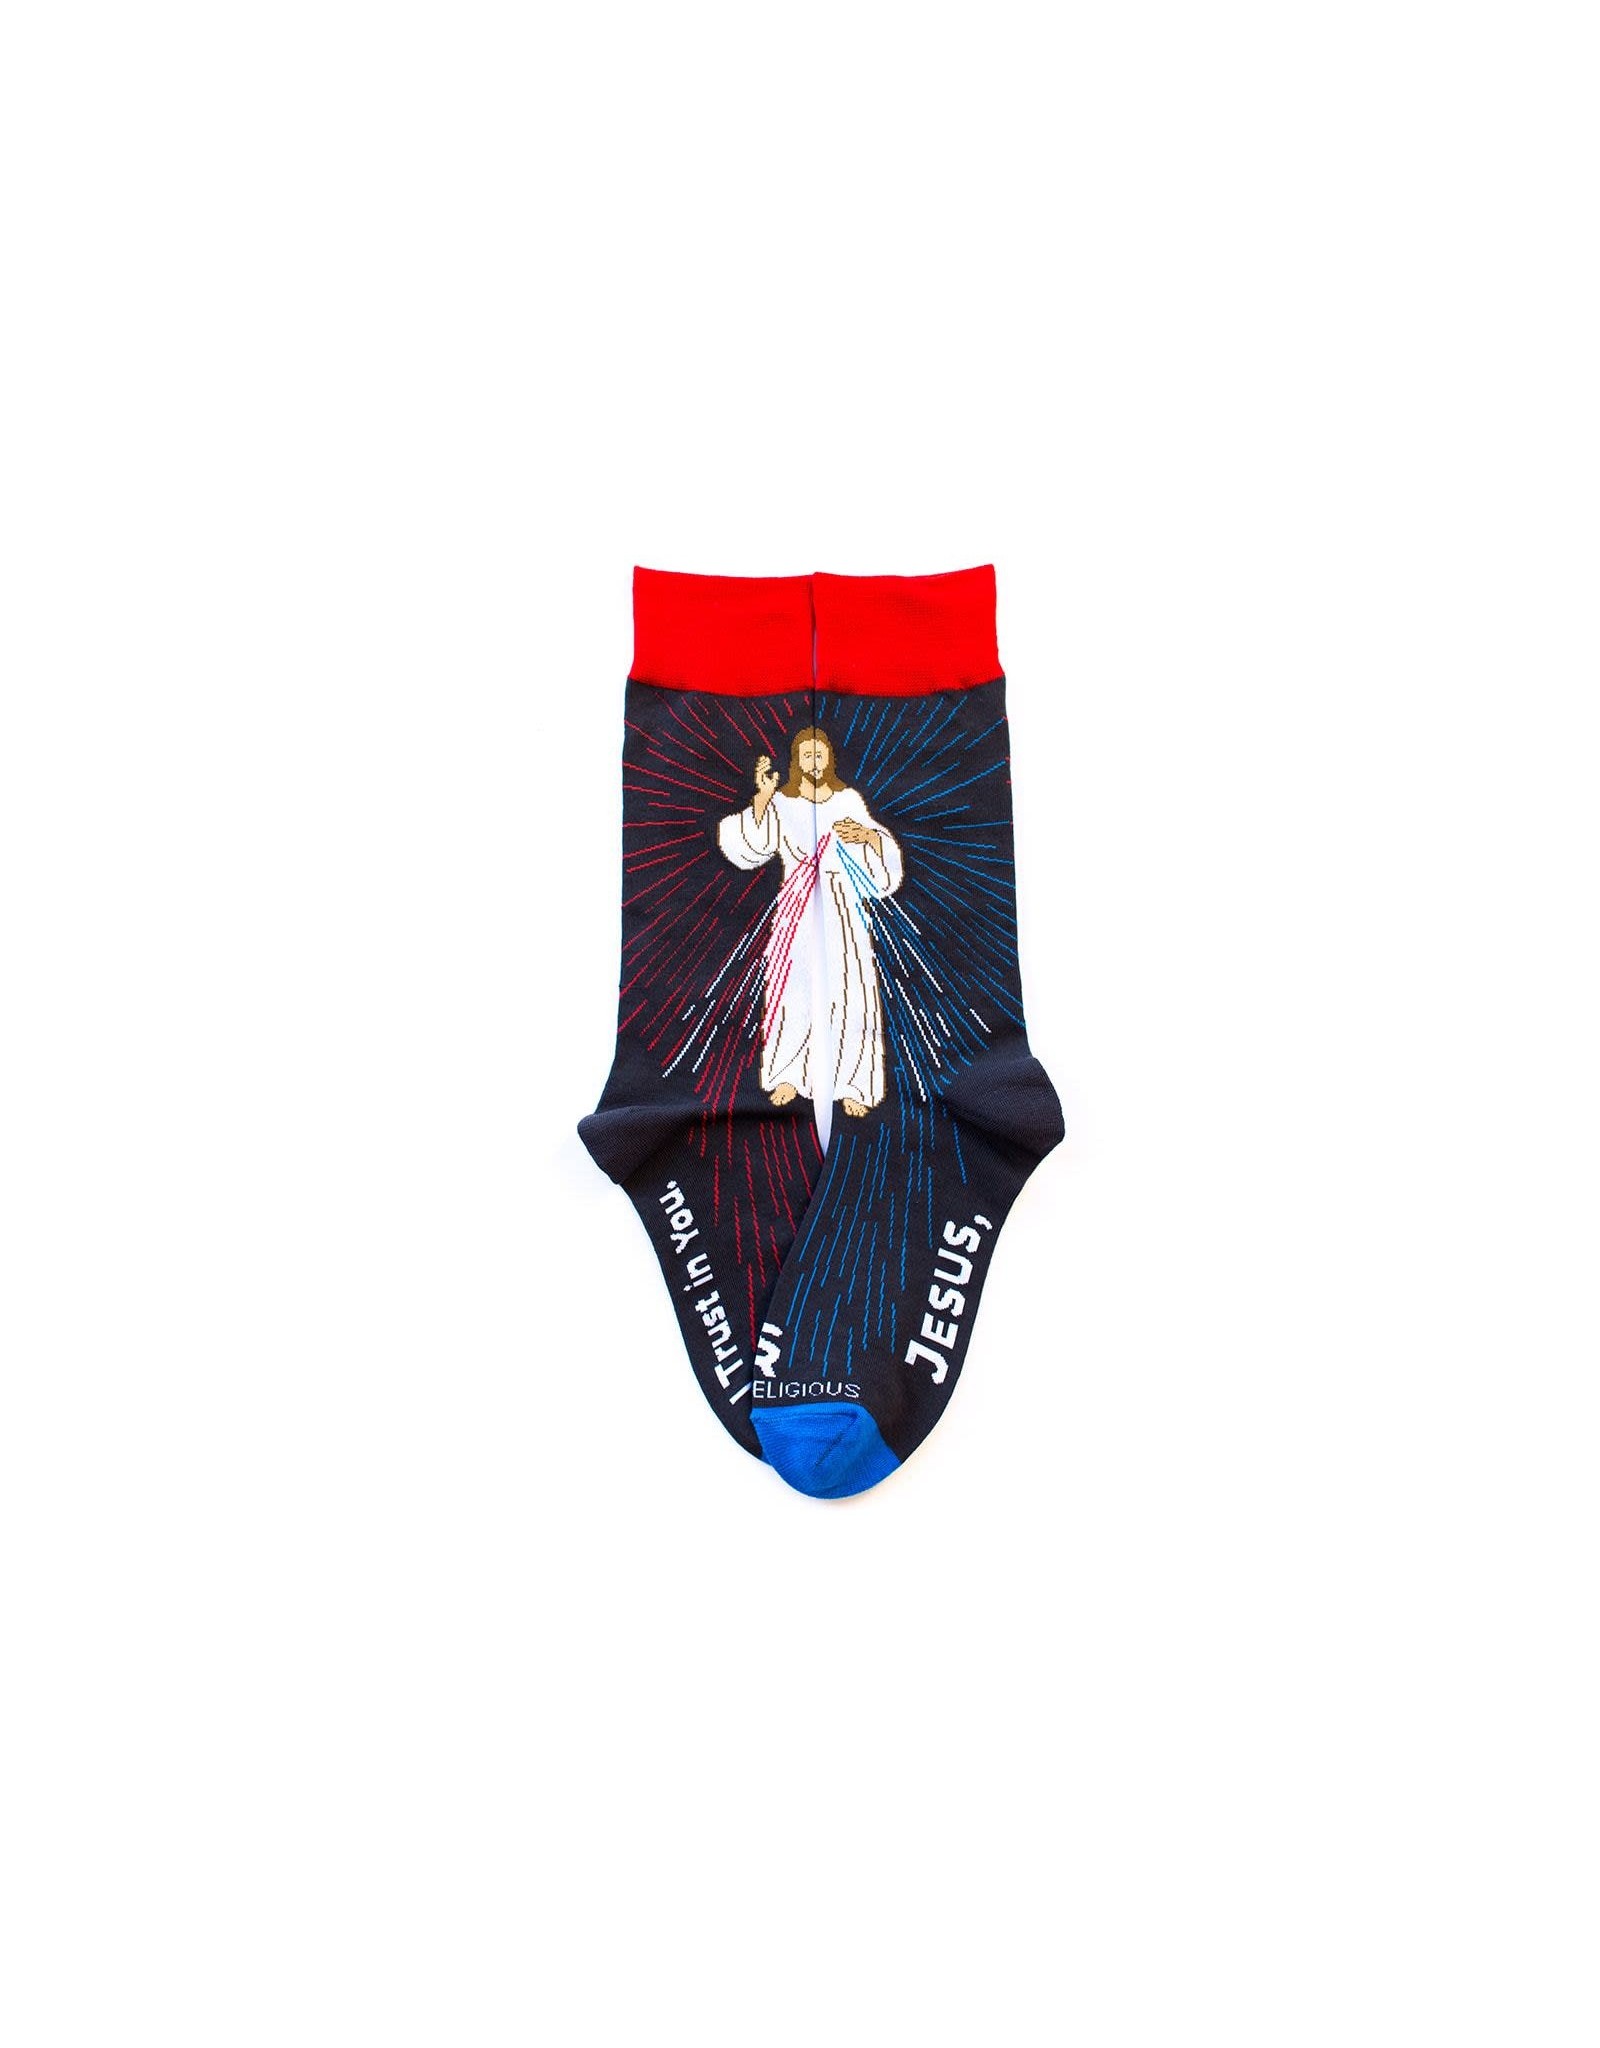 Socks - Divine Mercy